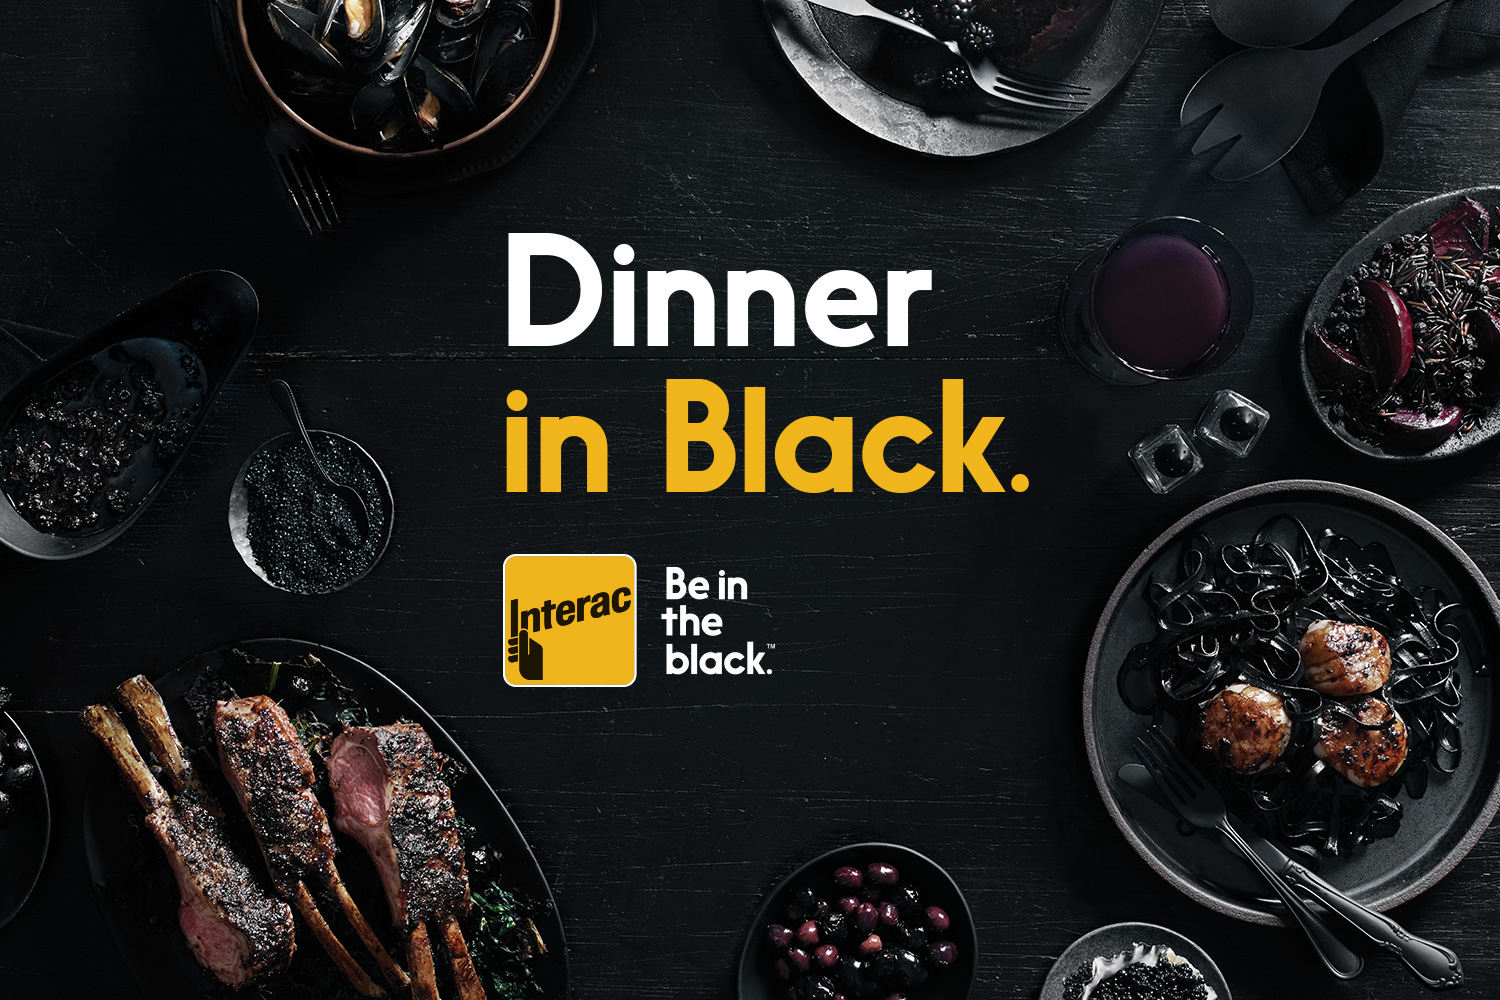 Interac-Dinner in Black